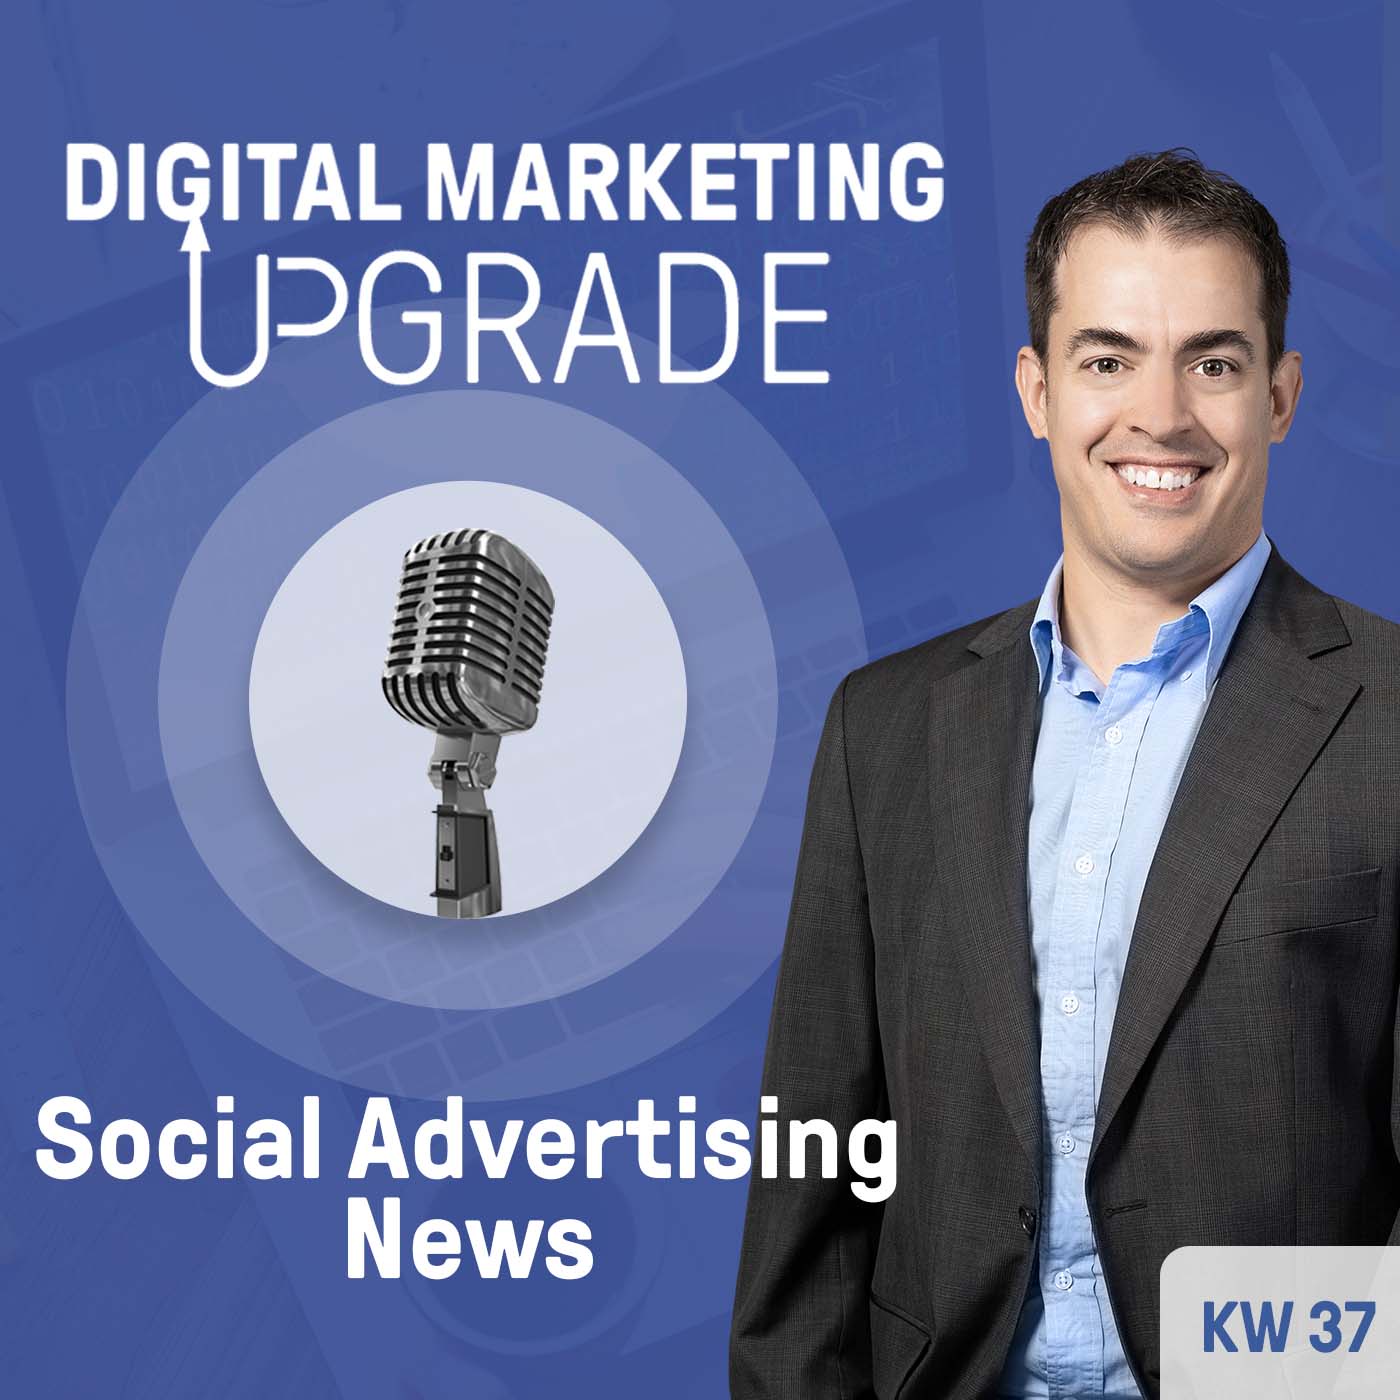 Social Advertising News - KW 37/22